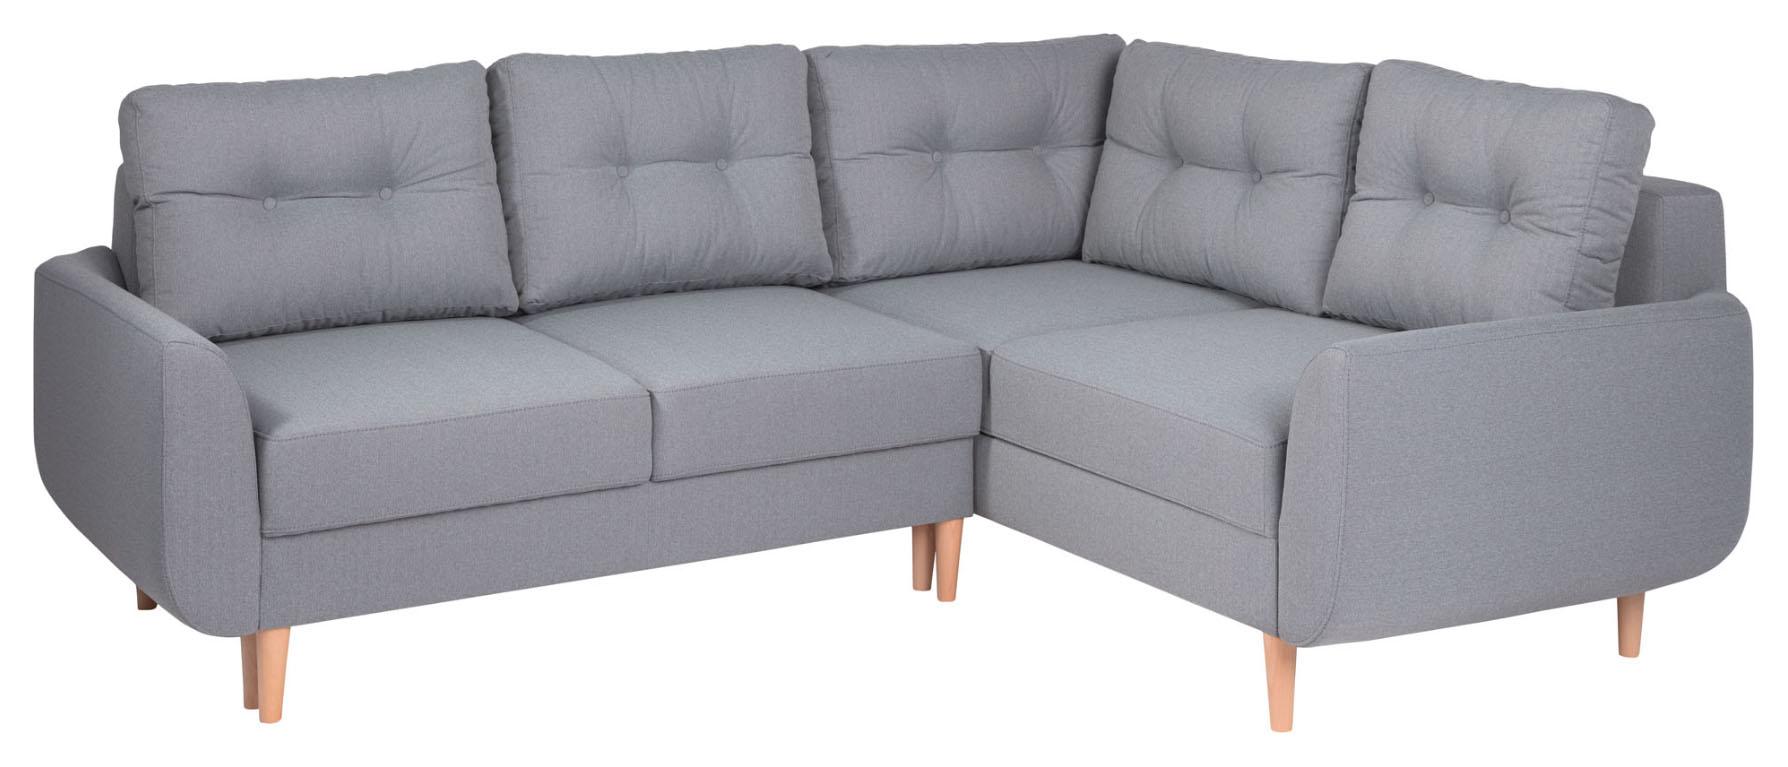 Big corner sofa with function Cotta